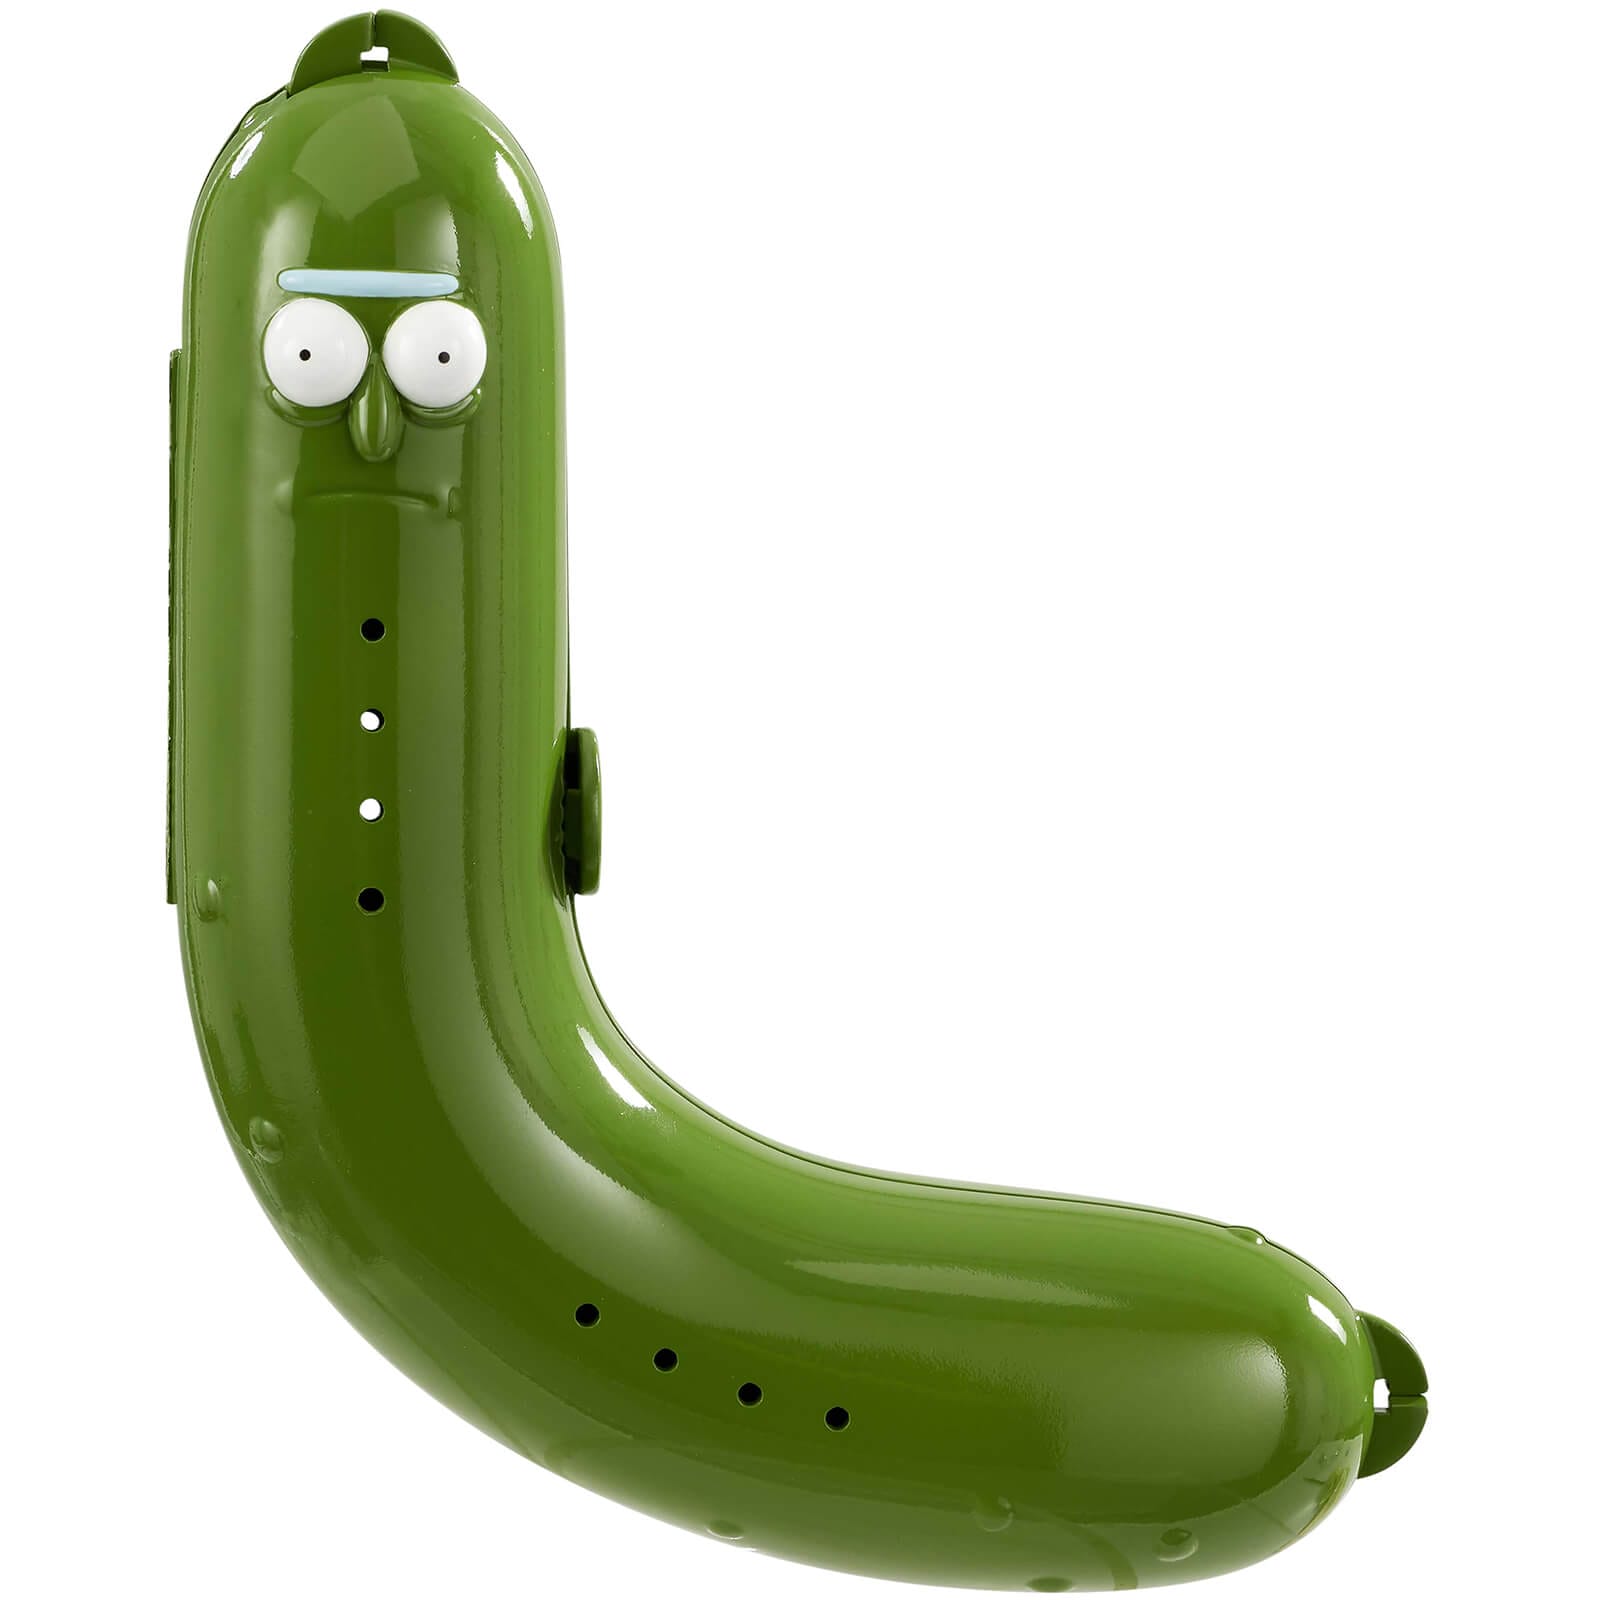 It's a Pickle Rick banana guard